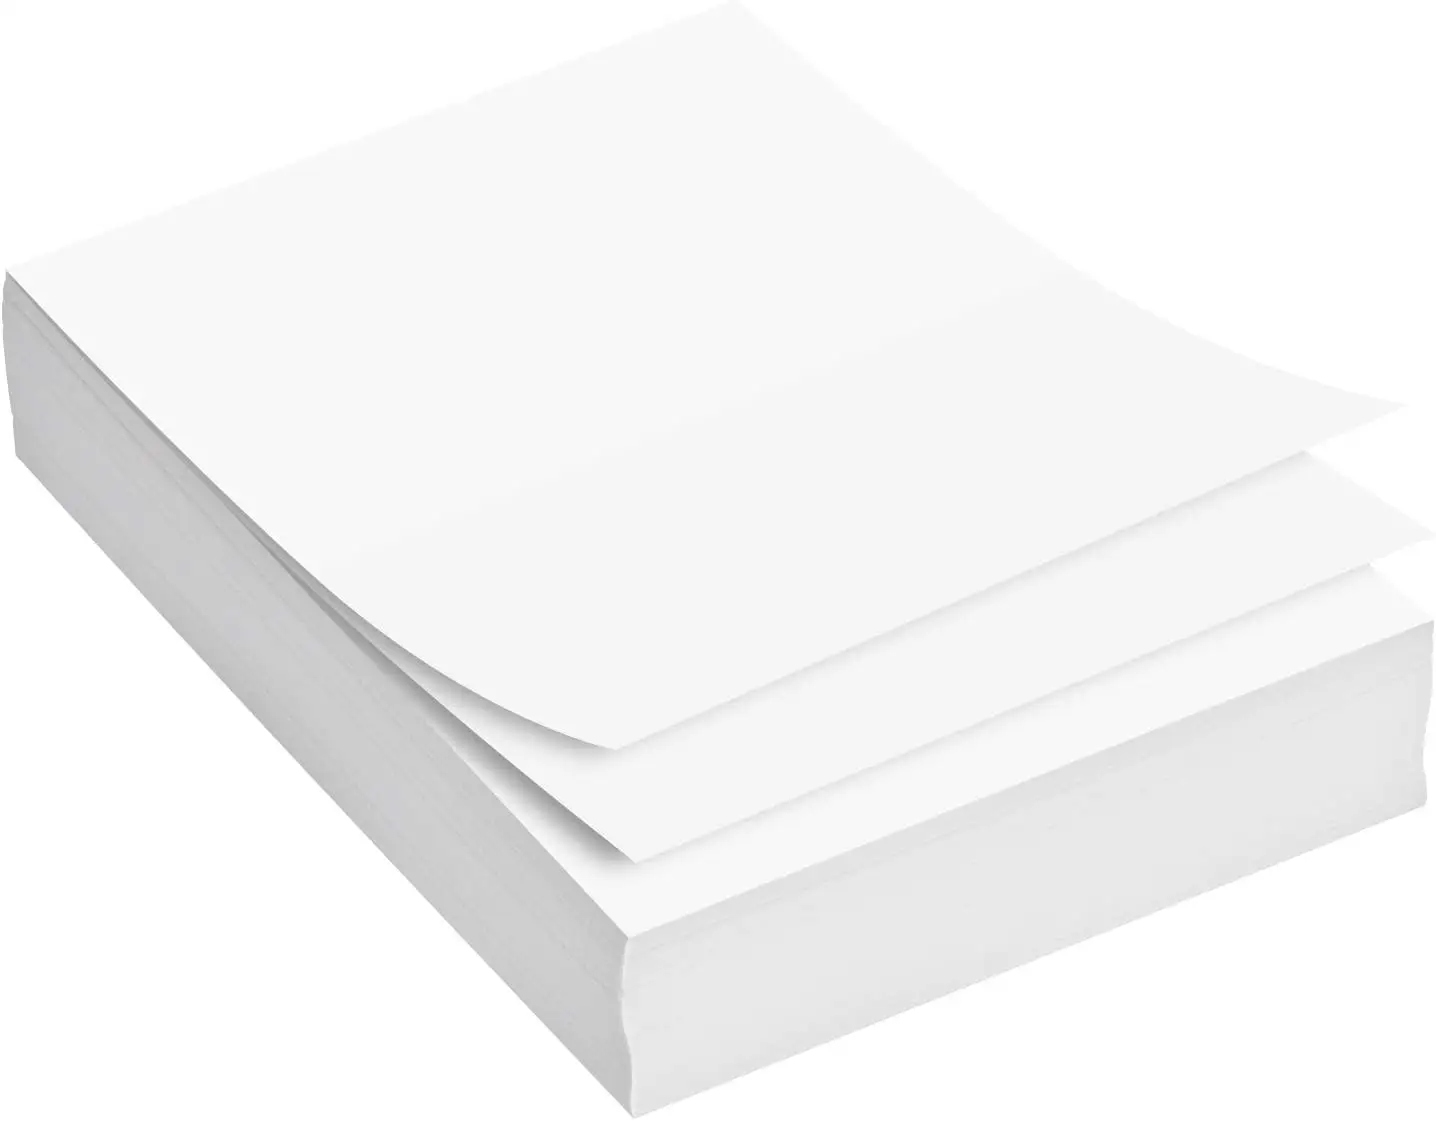 Asse livre 20 folhas Printable Water Slide Decal Paper No Baking Transferência de papel claro para vidro cerâmico